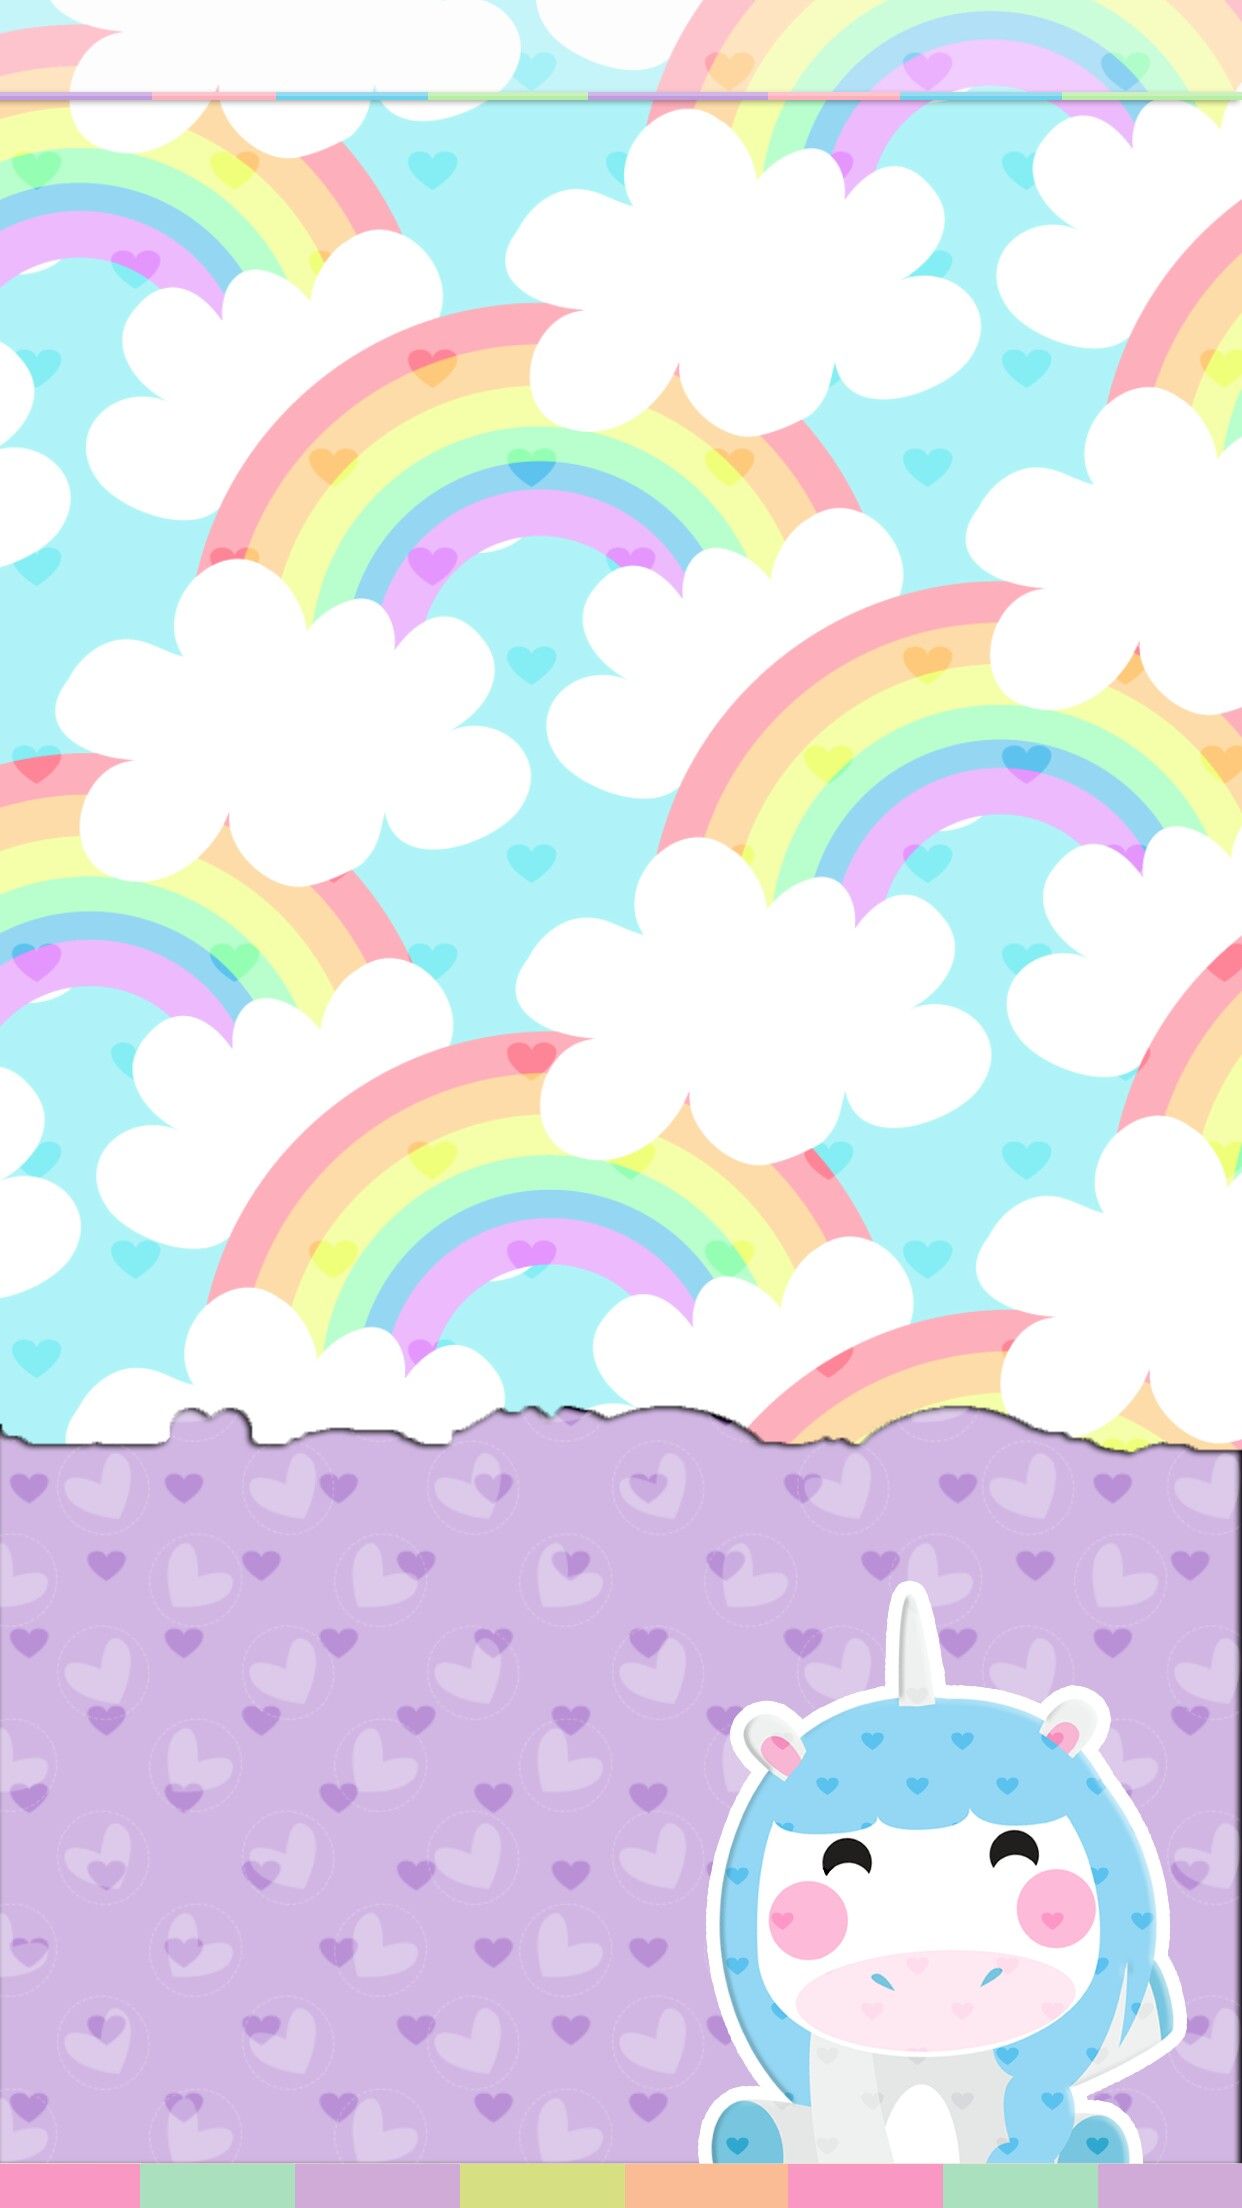 Unicorn and rainbows #wallpaper #cute. Unicorn wallpaper, Unicorn wallpaper cute, Rainbow wallpaper